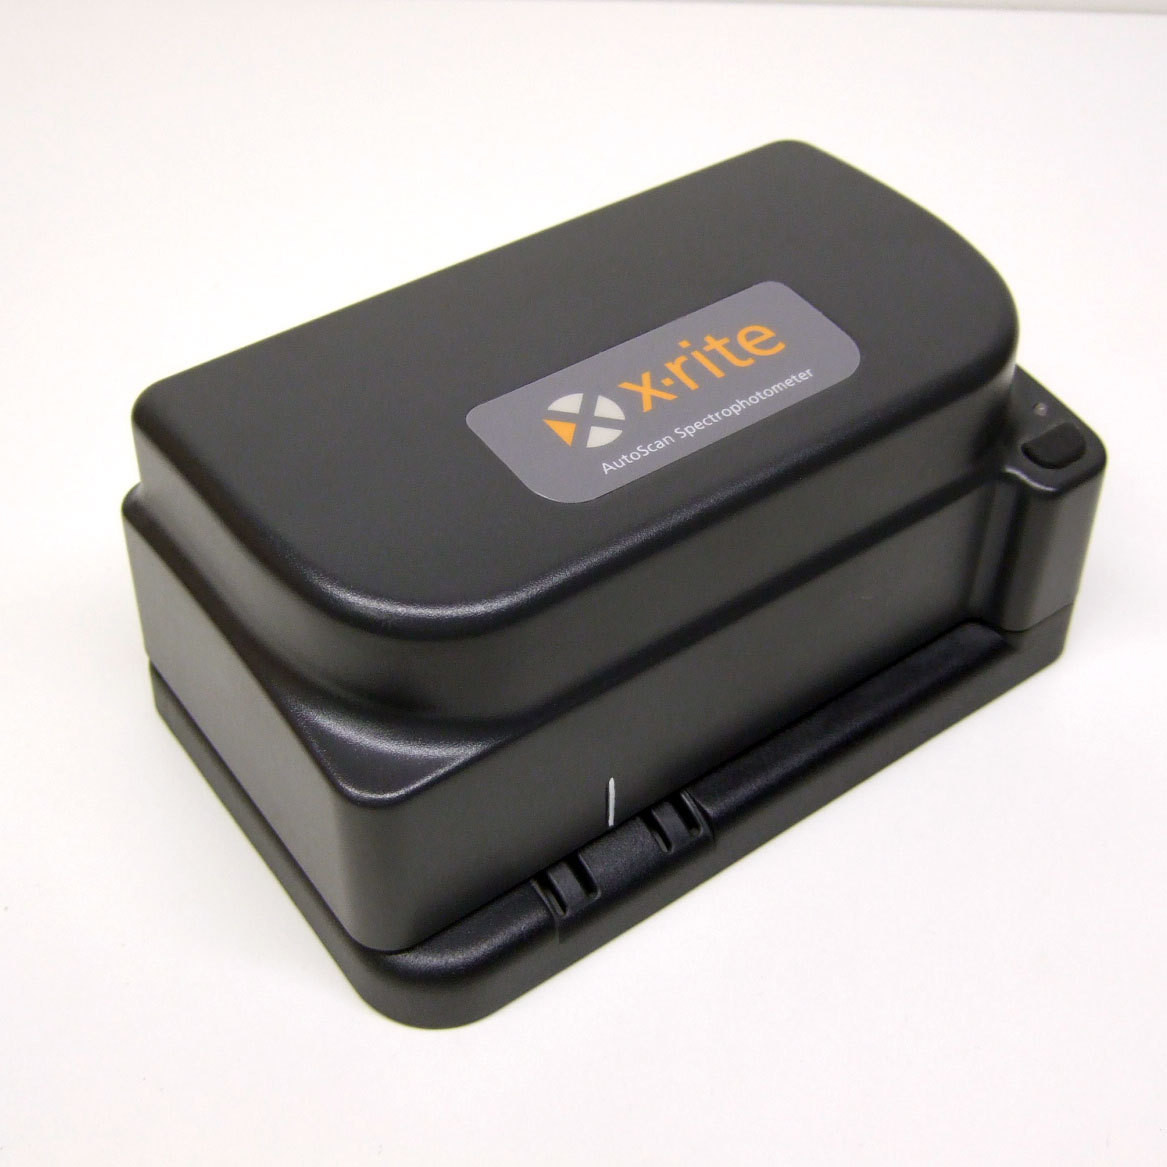 X-Rite DTP41 Spectrophotometer Autoscan Densitometer Calibration Ref DTP 41 for sale online 